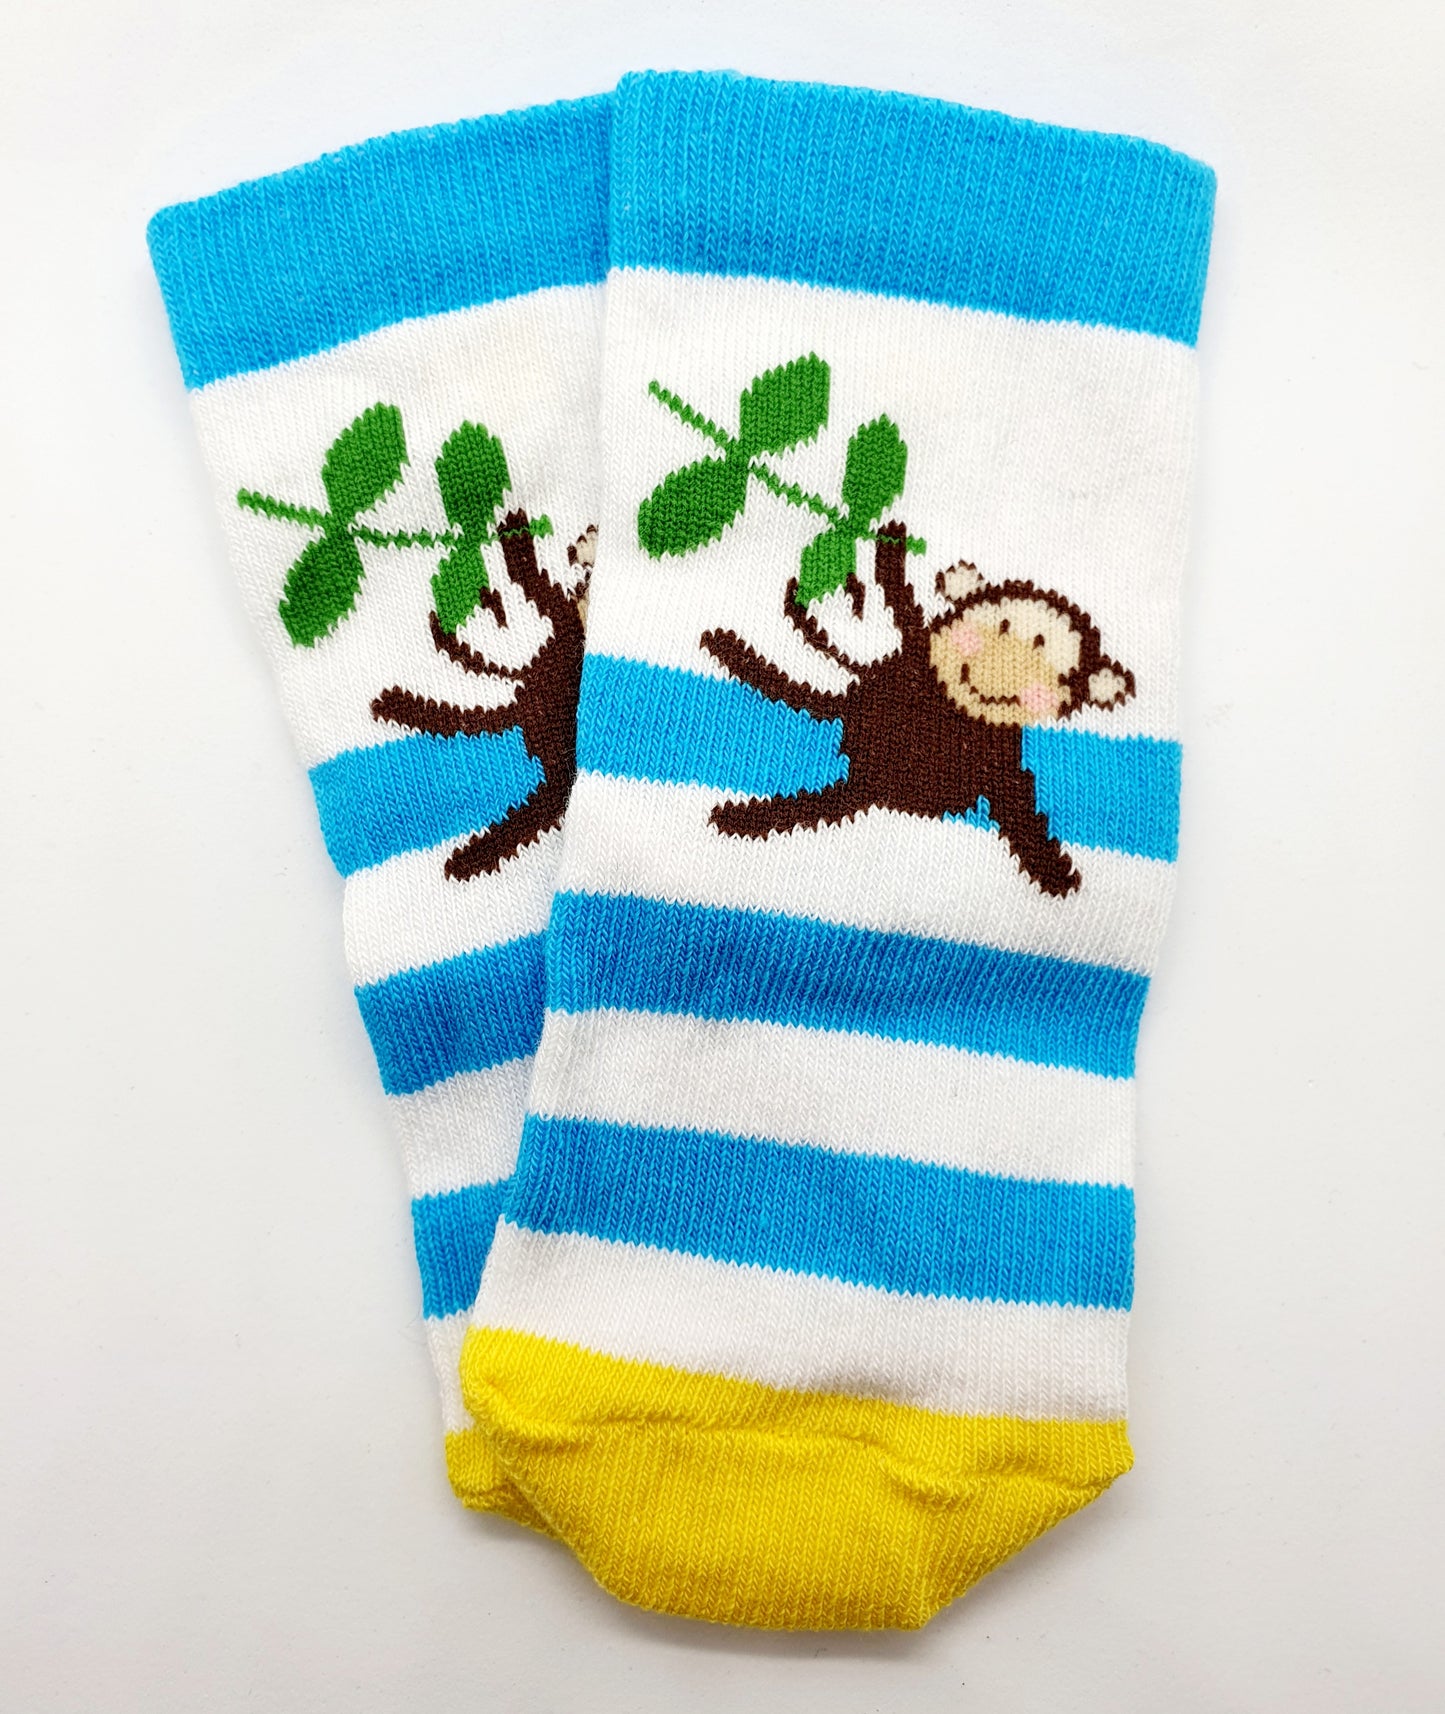 Toddler Socks – Hello Cheeky 1-2 years